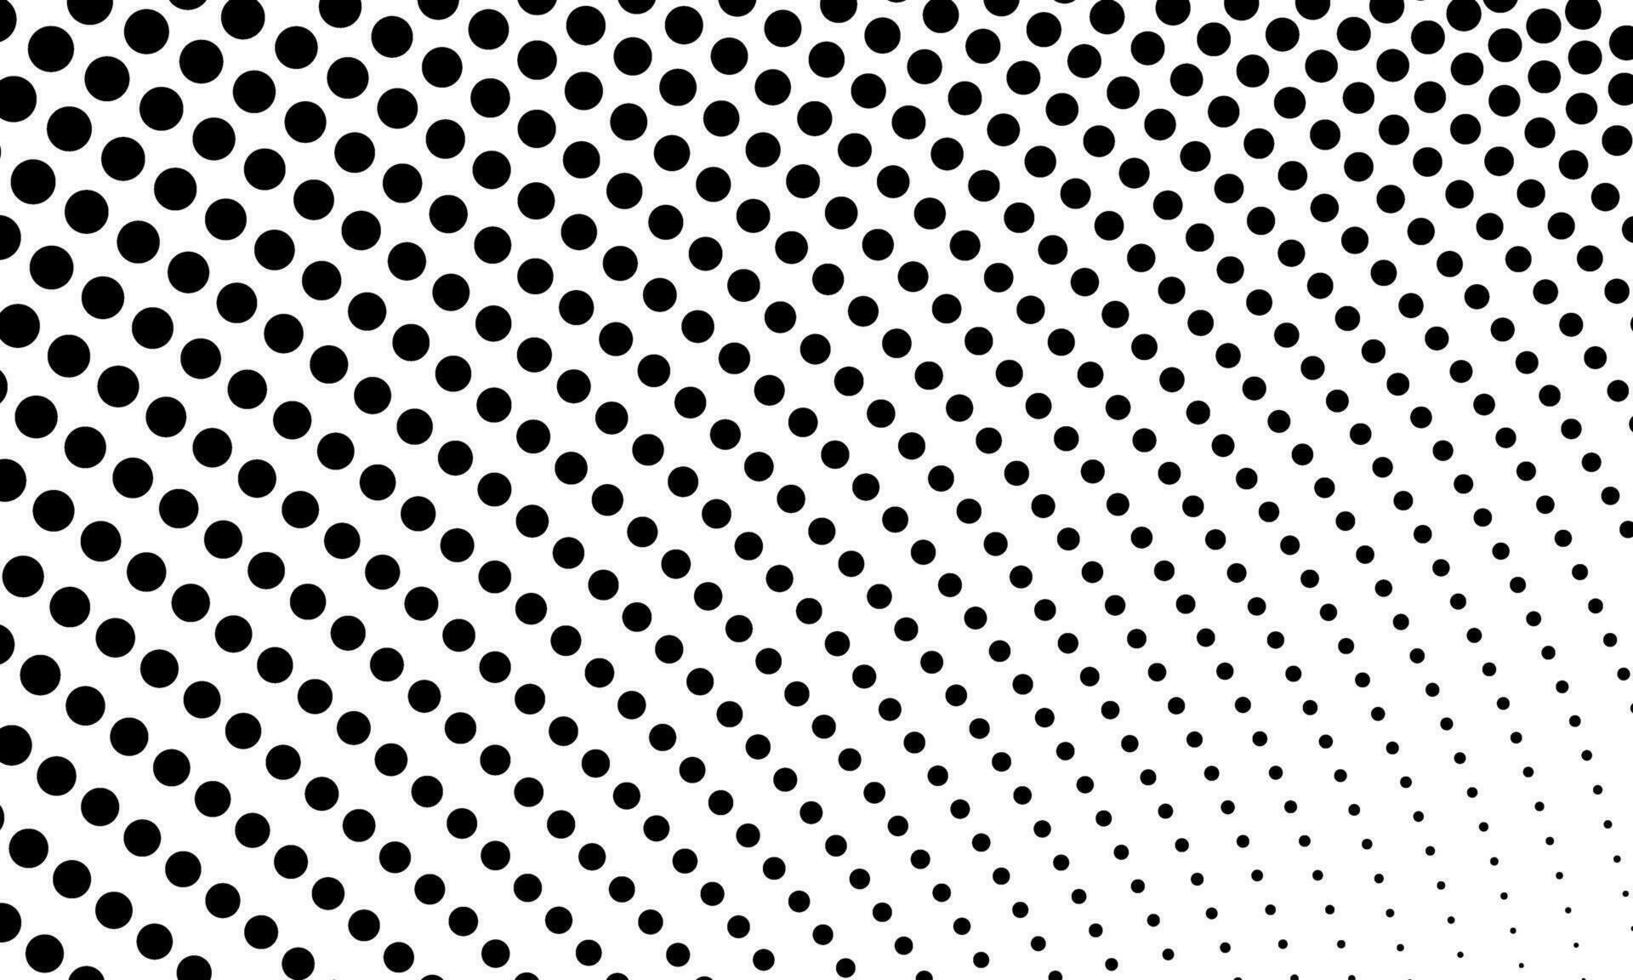 Color Halftone Dots Wave Pattern Vector Background